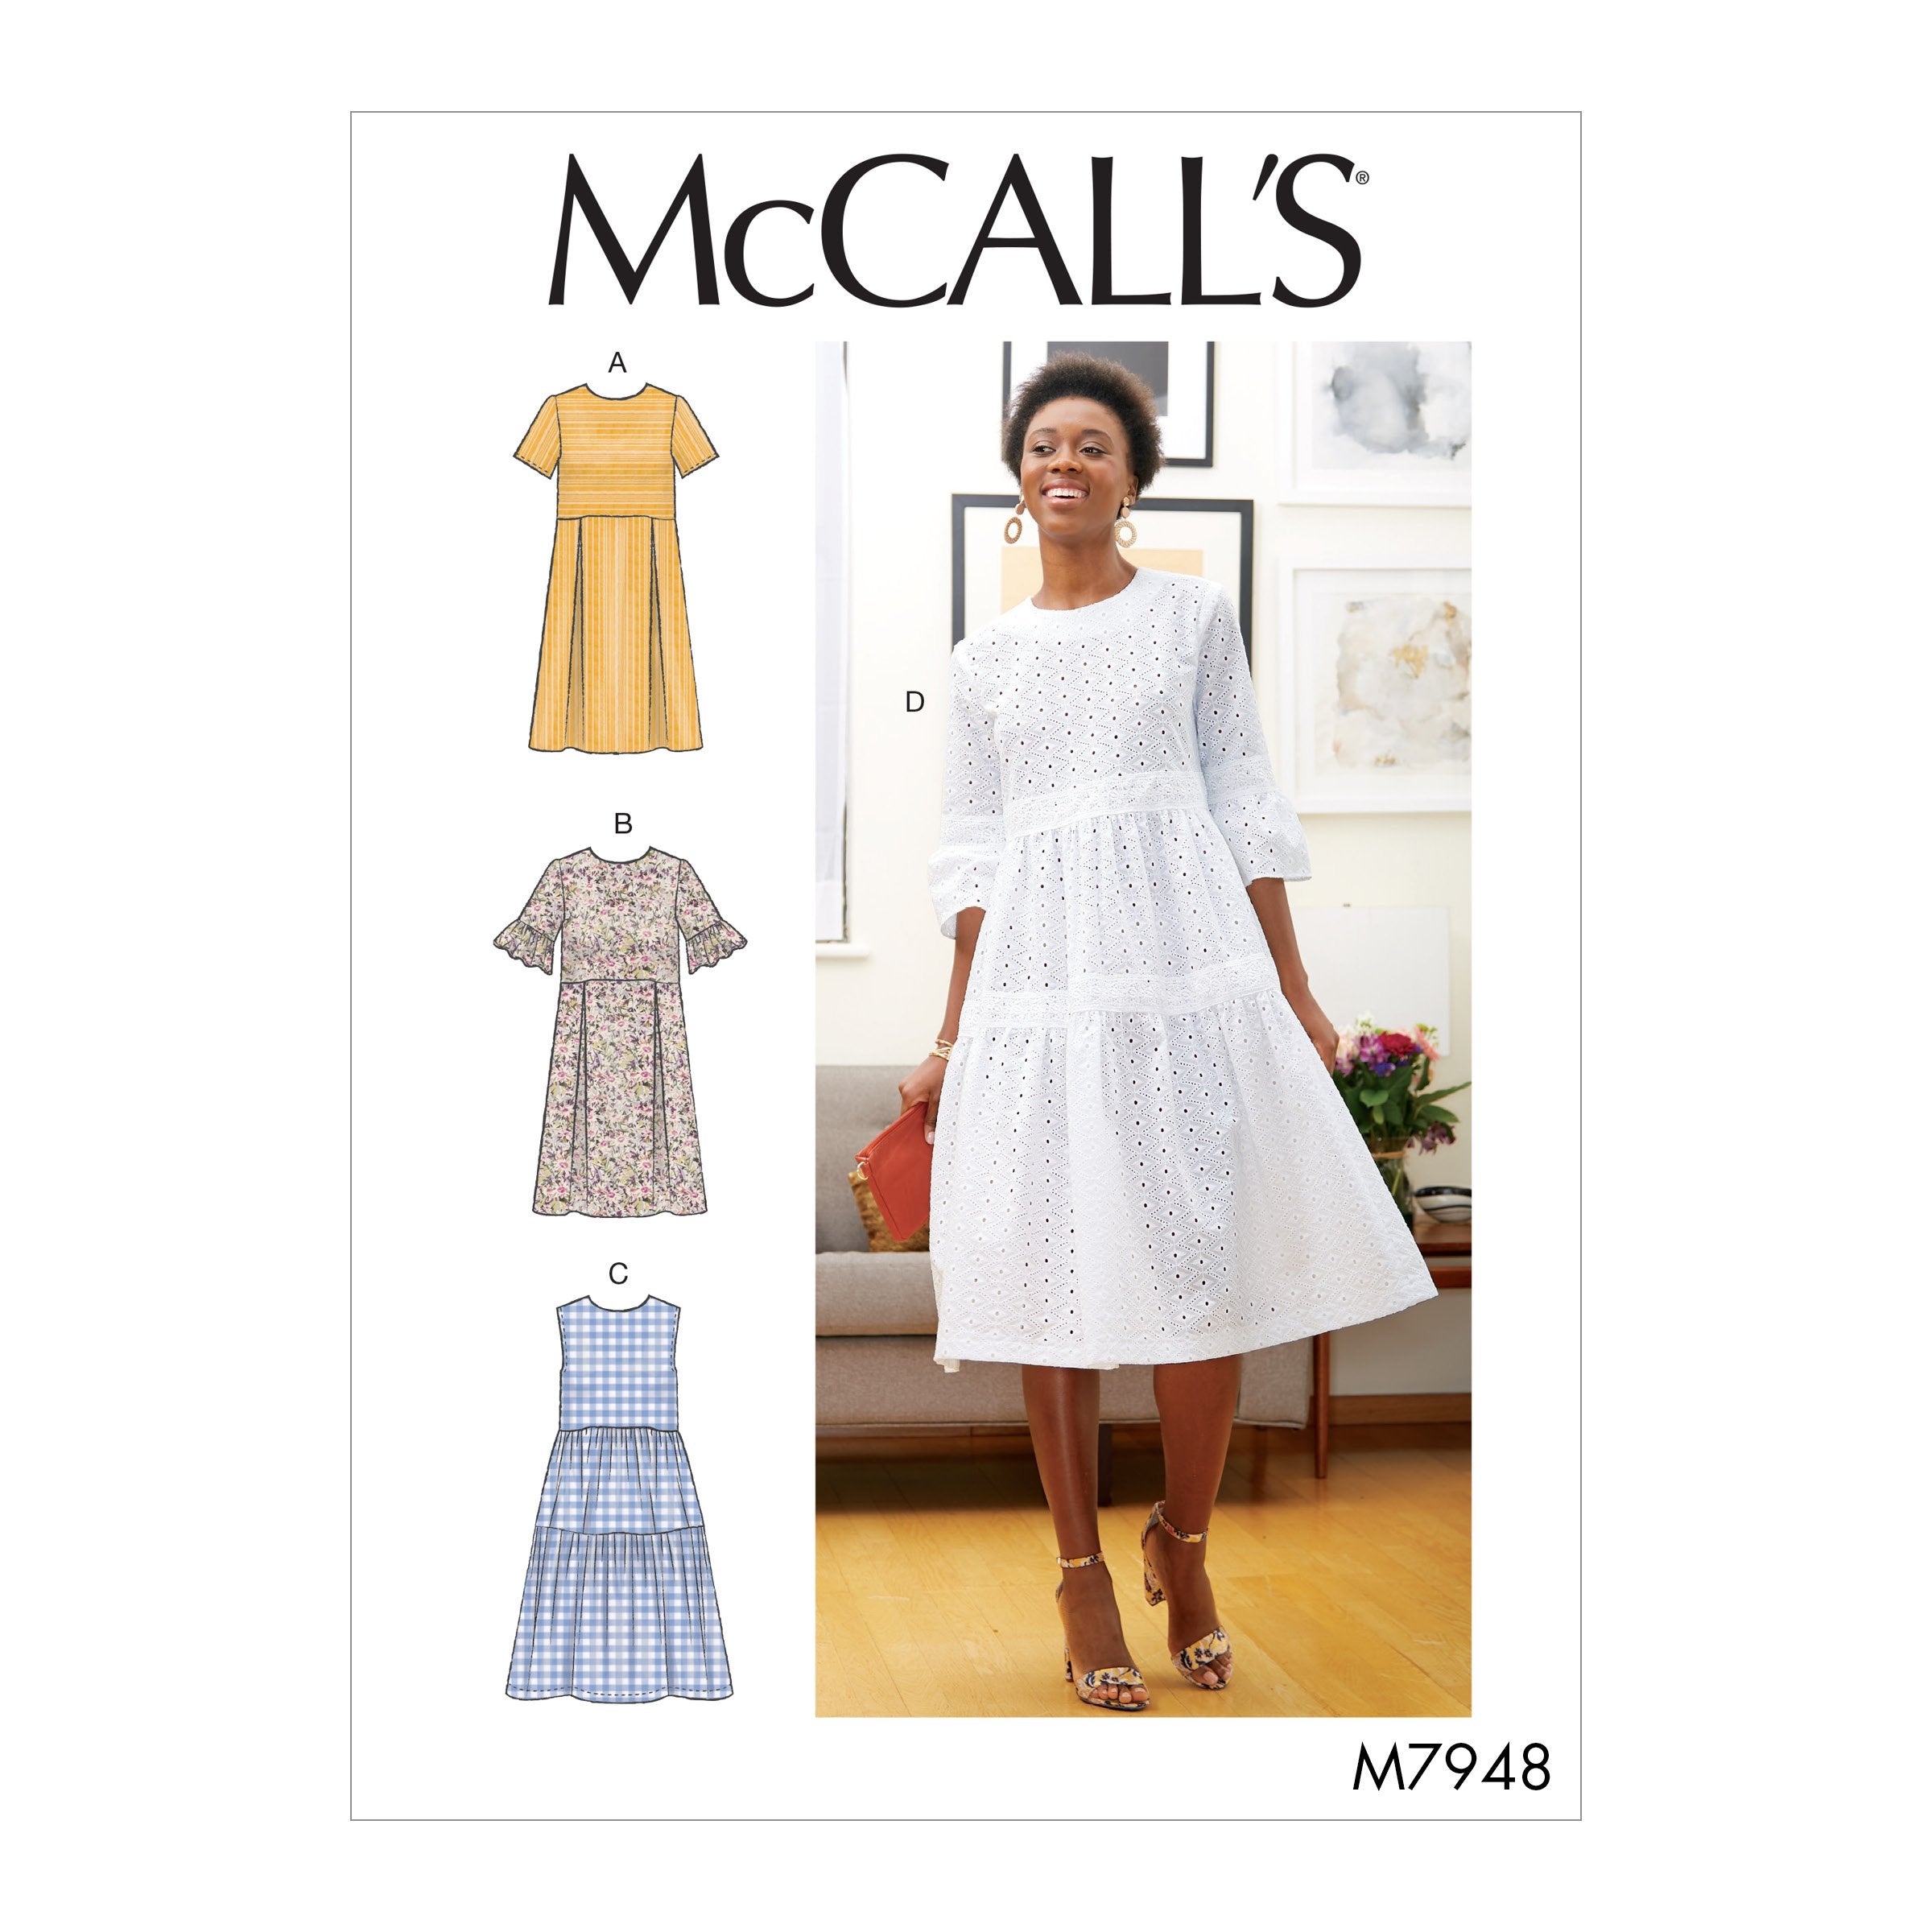 McCalls 7948 Dresses sewing pattern — jaycotts.co.uk - Sewing Supplies